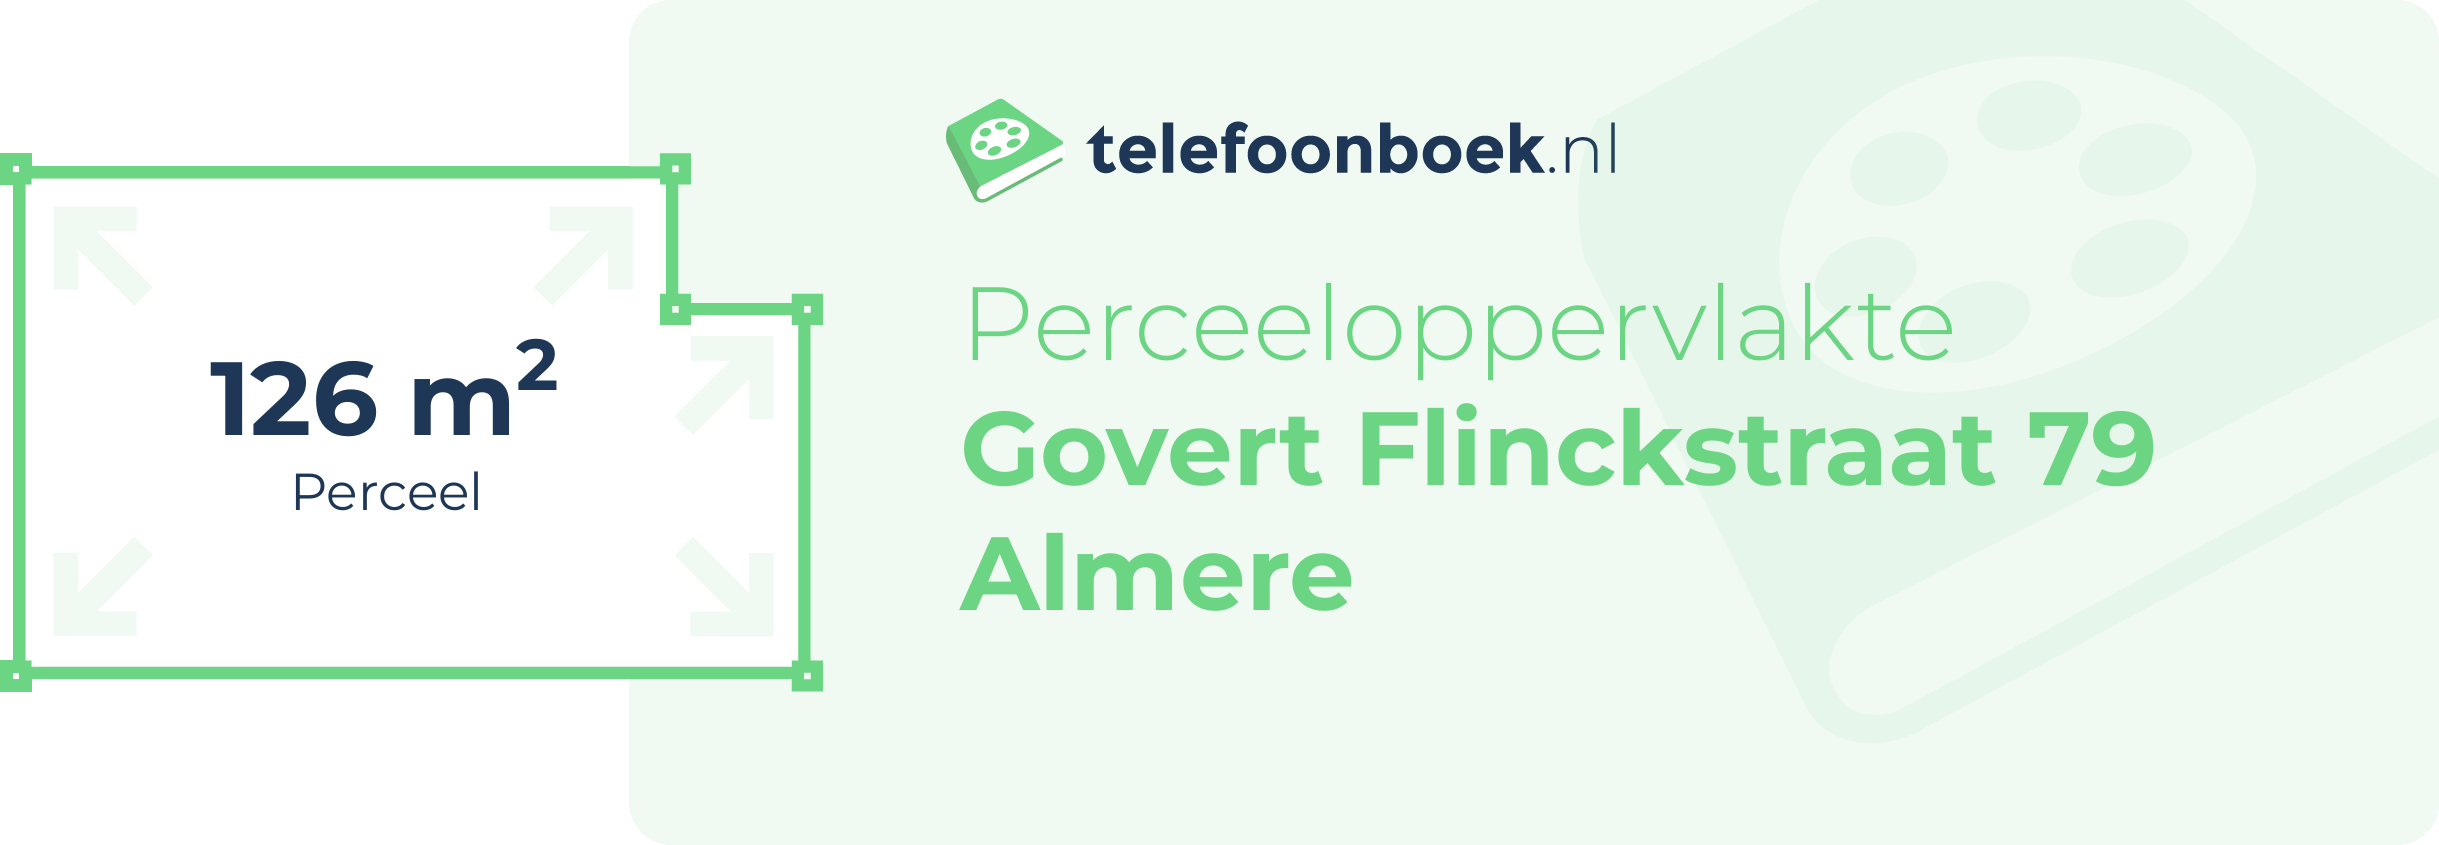 Perceeloppervlakte Govert Flinckstraat 79 Almere